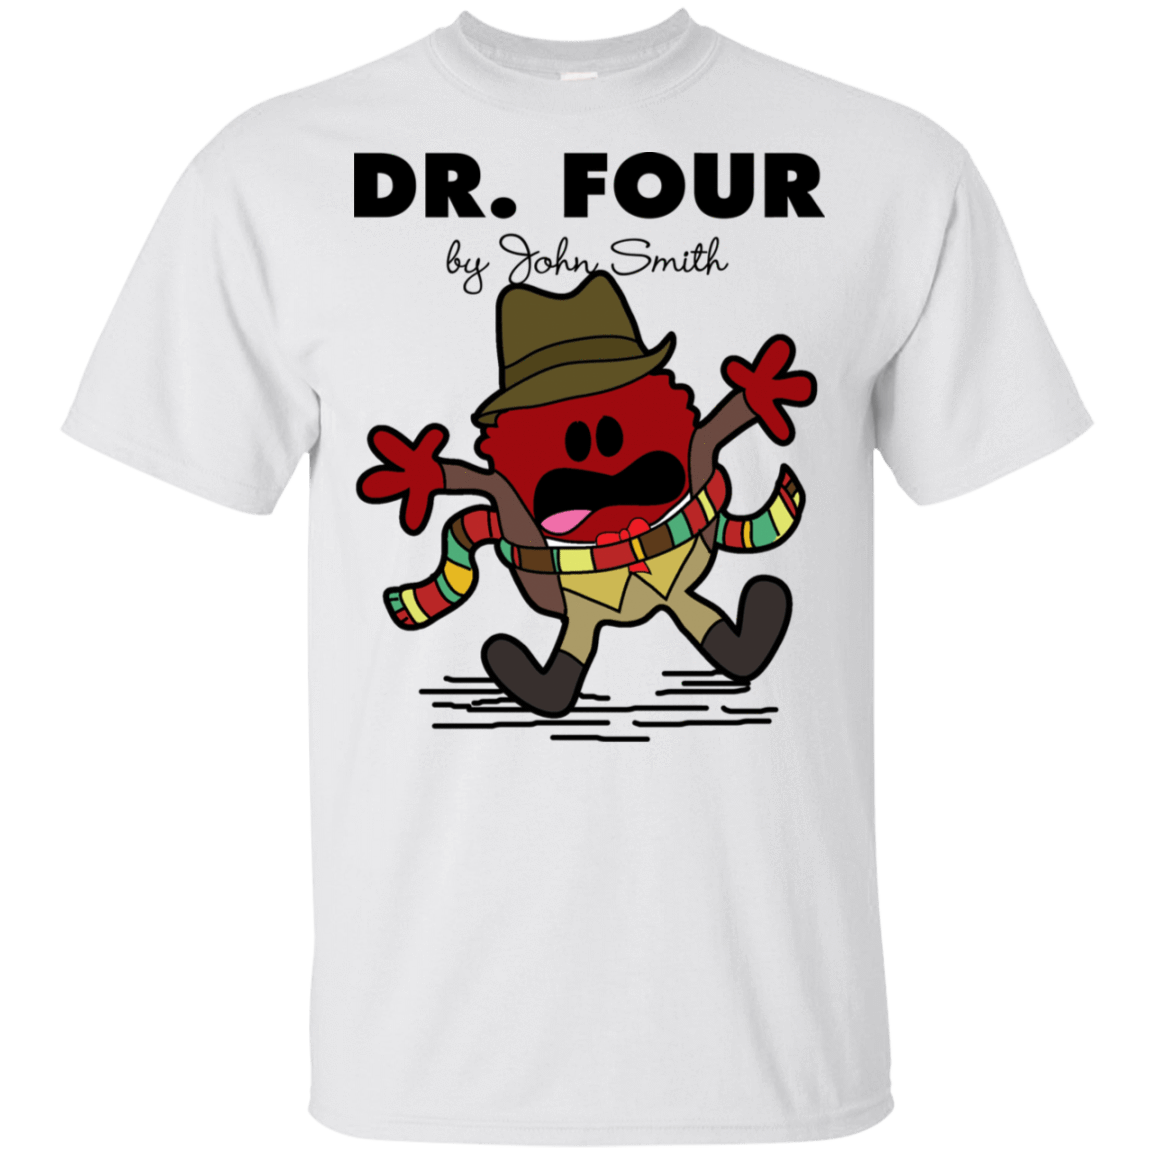 T-Shirts White / S Dr Four T-Shirt